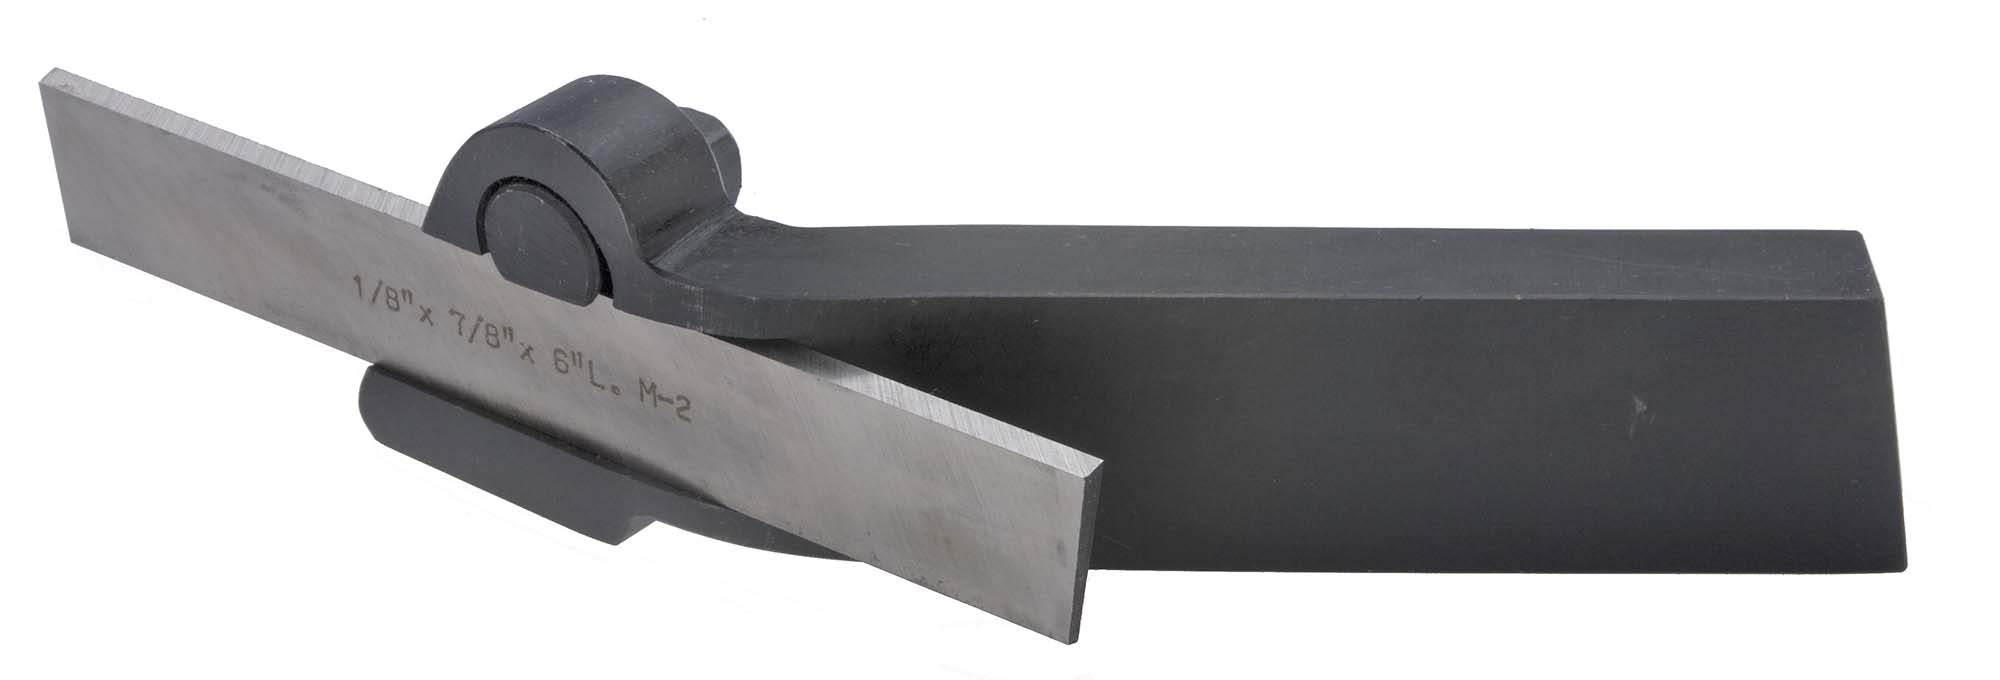 1/2 X 1-1/8 Shank Right Hand Lathe Cutoff Tool Holder, holds 1/8 x 3/4" Blades